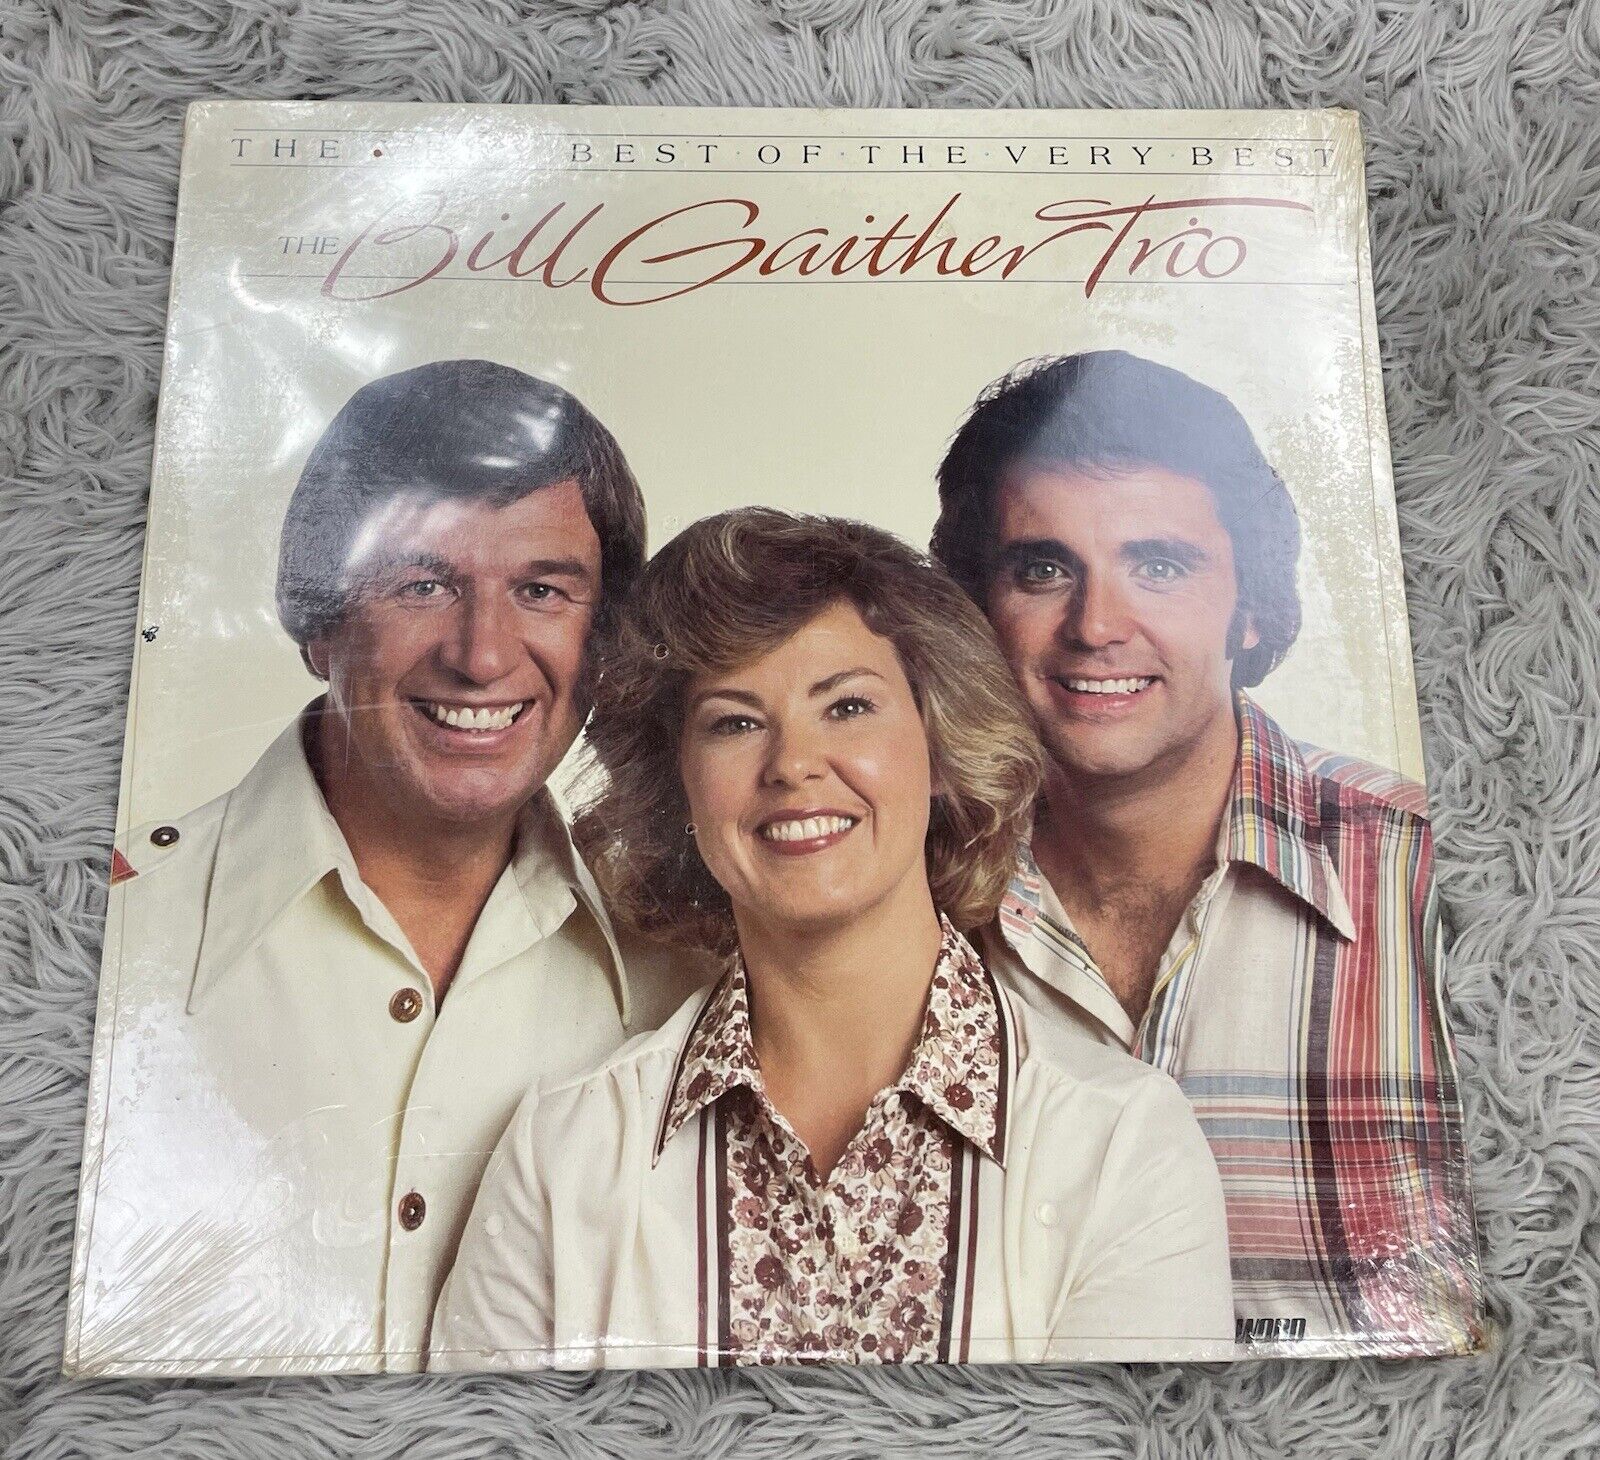 The Bill Gaither Trio: The Very Best of The Very Best Vinyl Album